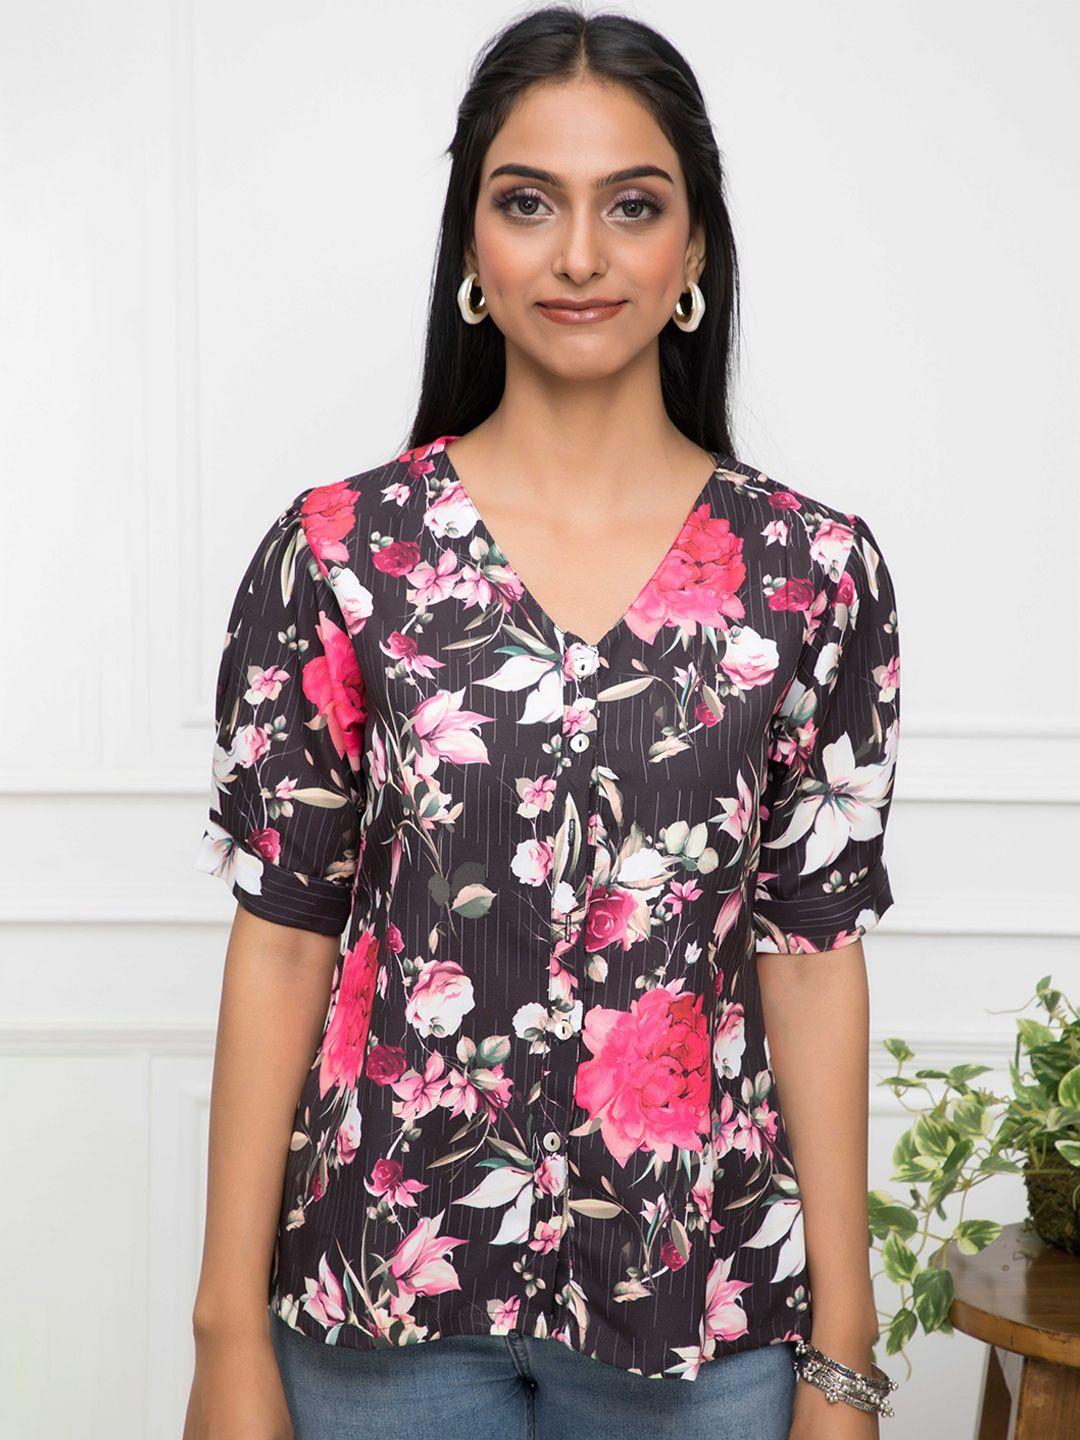 myshka floral printed v-neck puff sleeves shirt style top